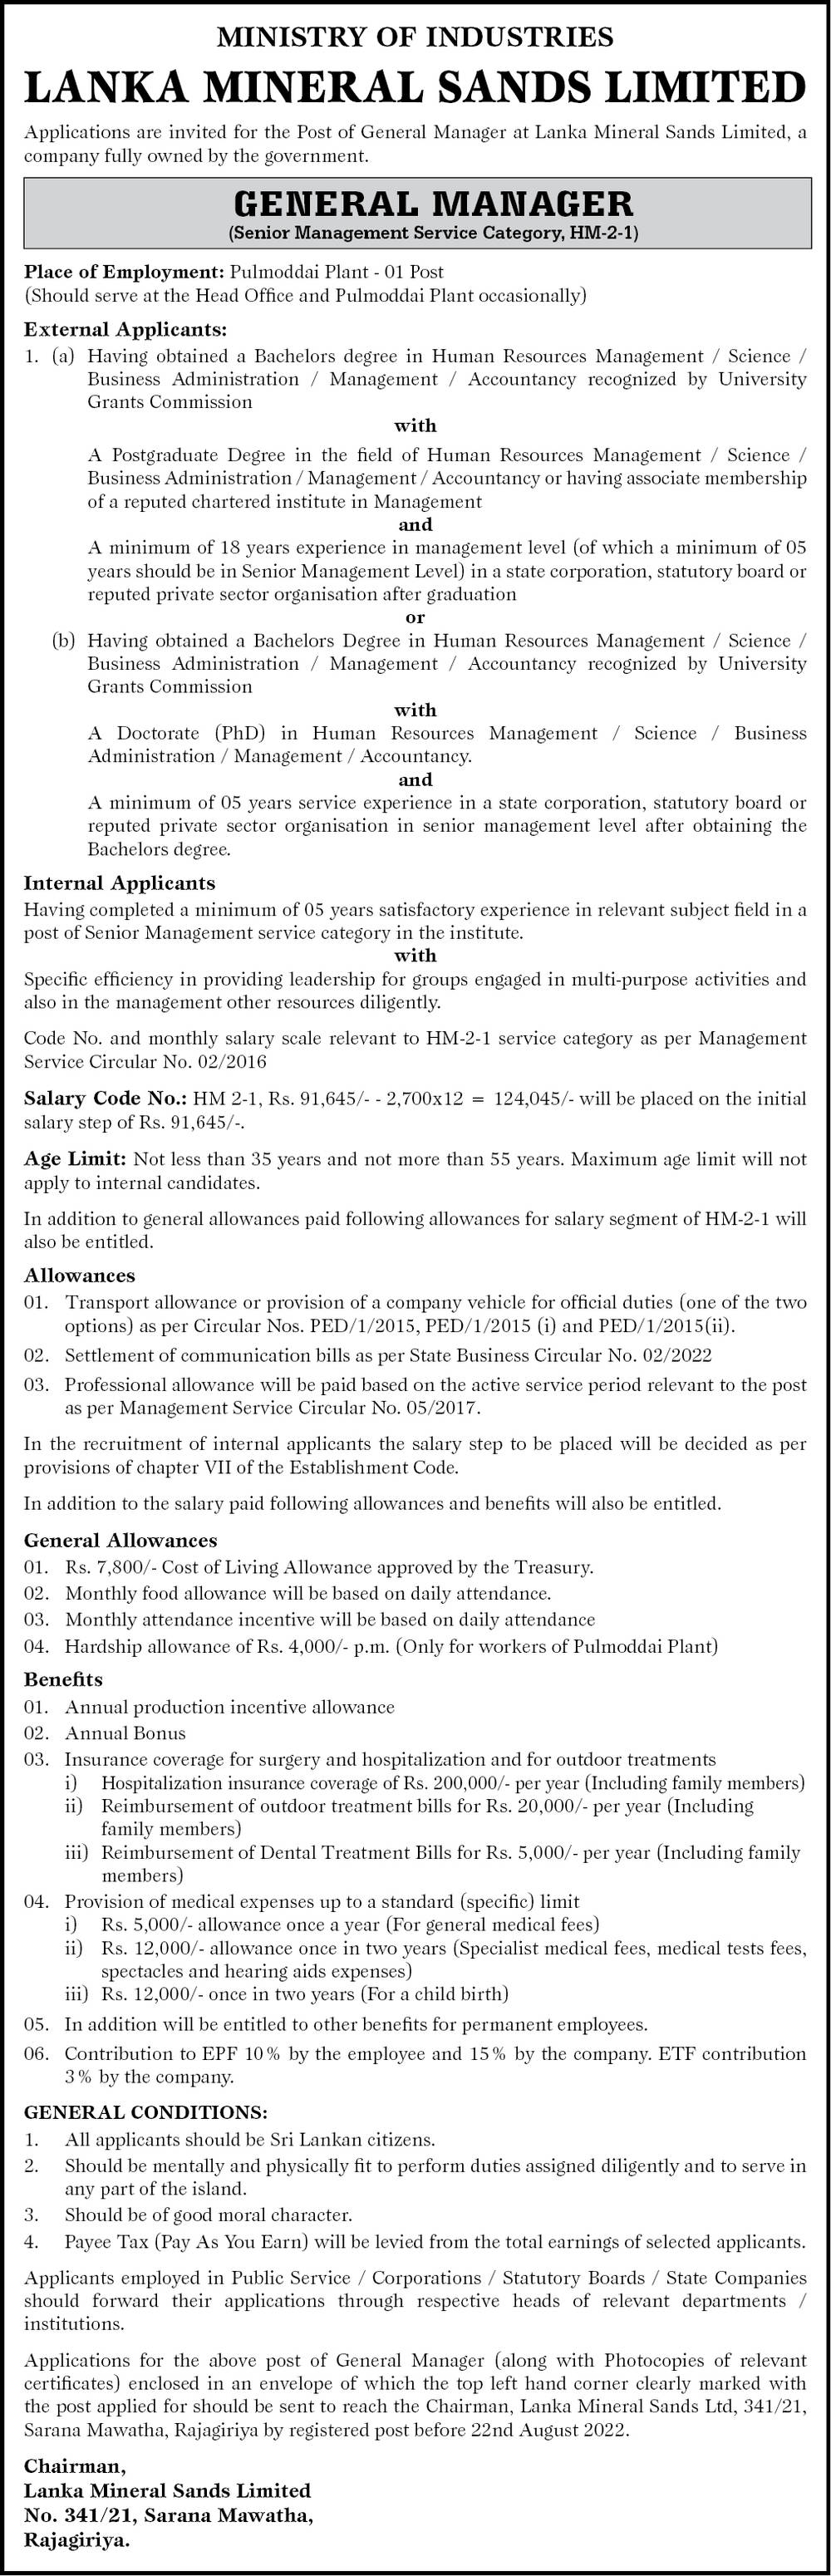 General Manager Job Vacancy in Lanka Mineral Sands Ltd Jobs Vacancies